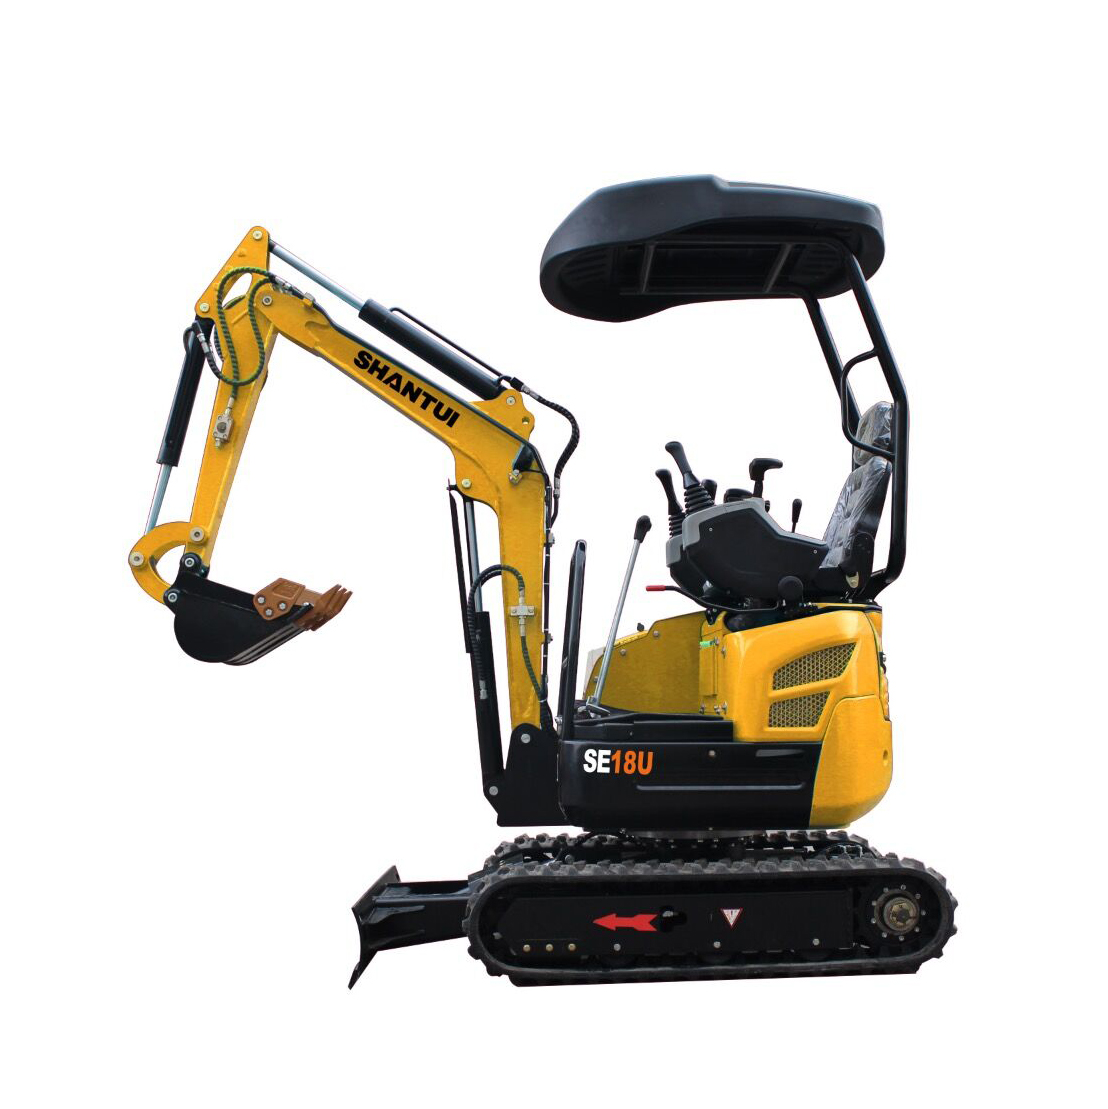 SE18U-Excavator-Shantui Construction Machinery Co., Ltd